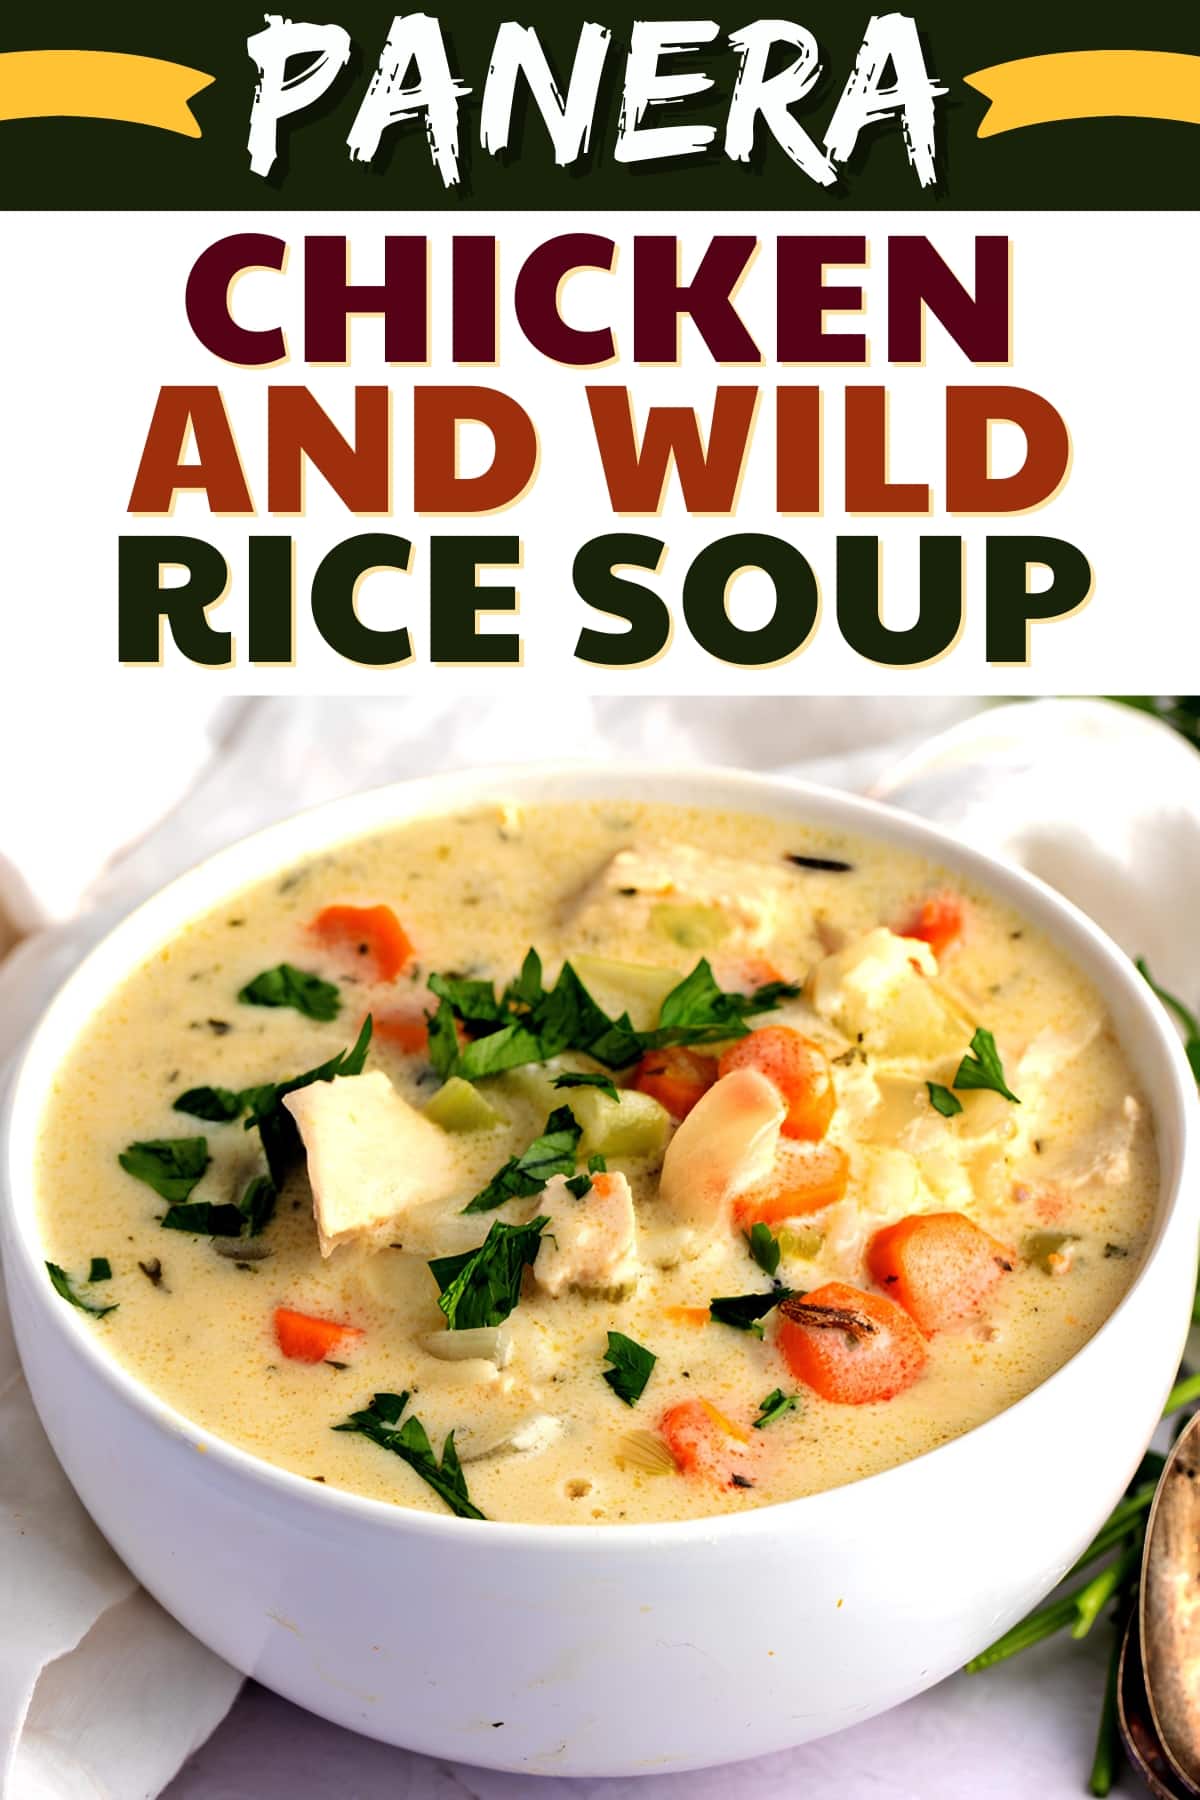 Panera Chicken and Wild Rice Soup 